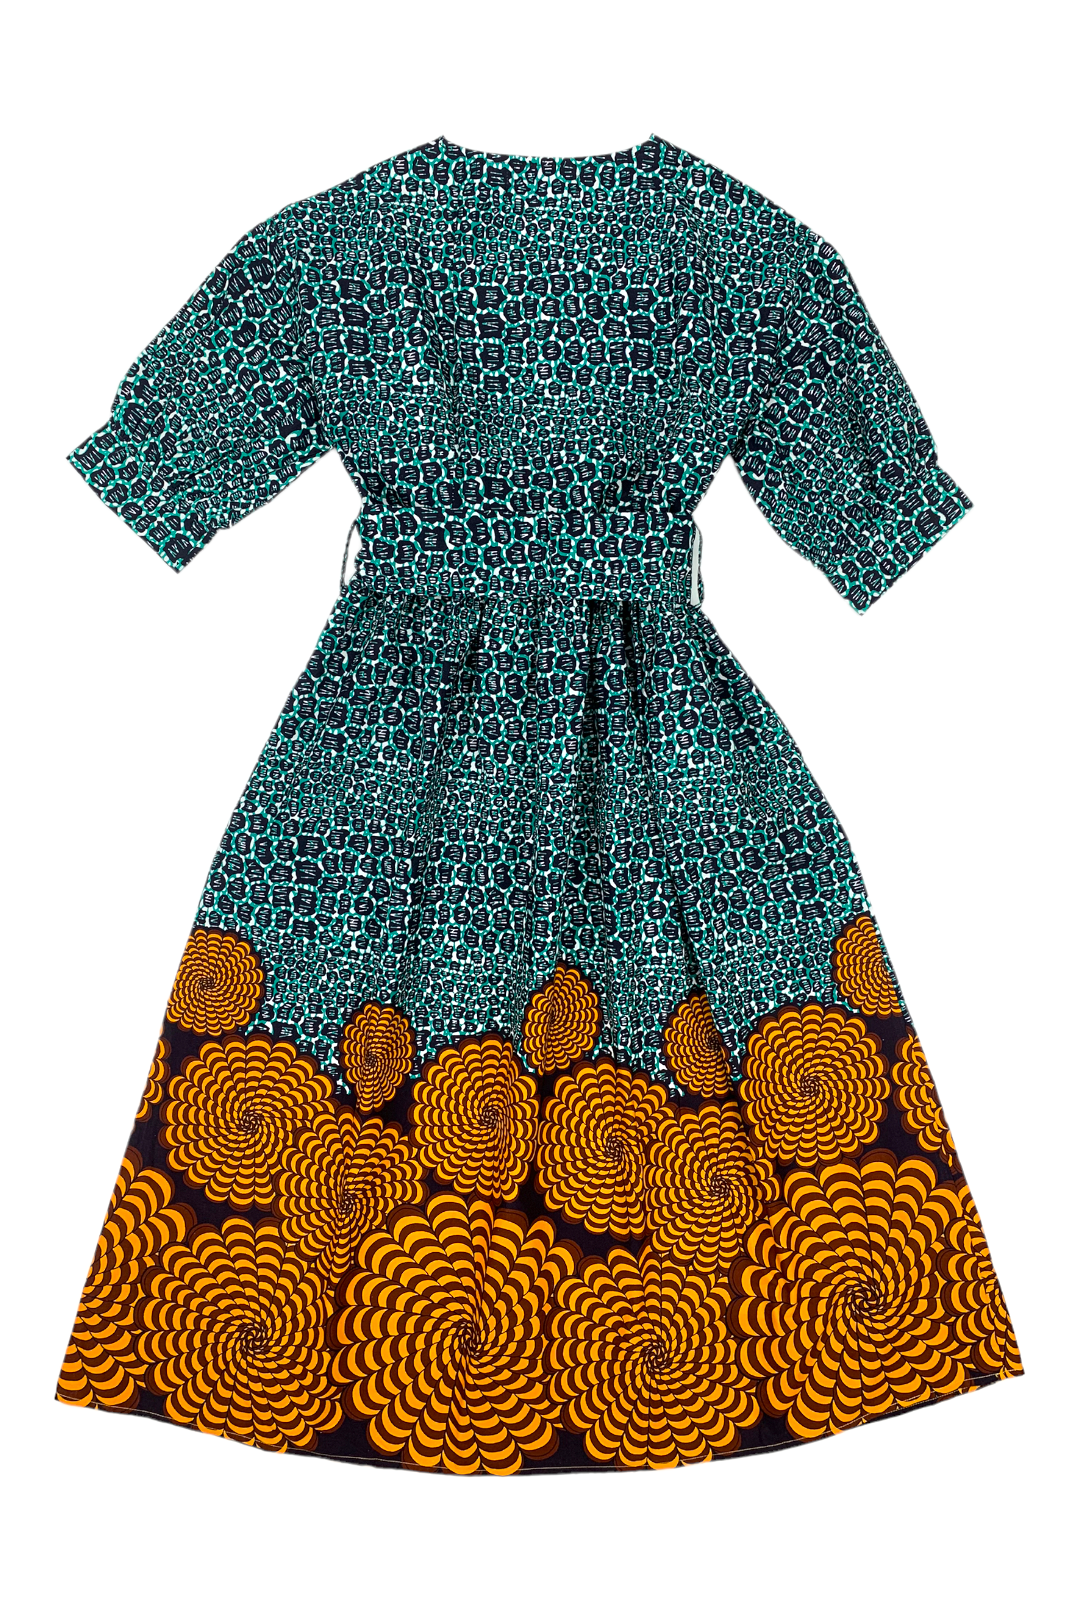 AFRICAN FLORAL PRINT DRESS